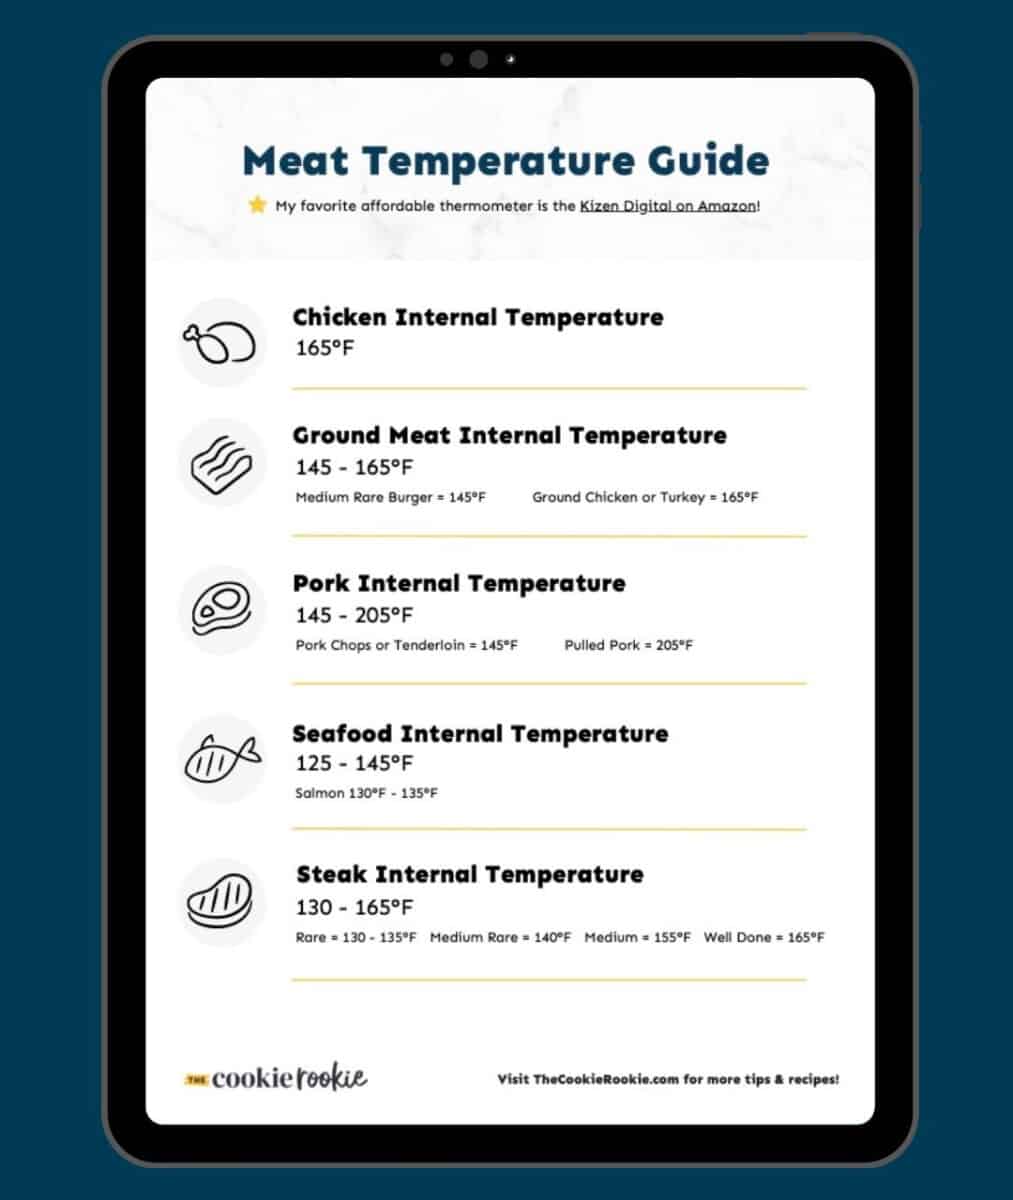 meat temperature guide iPad image